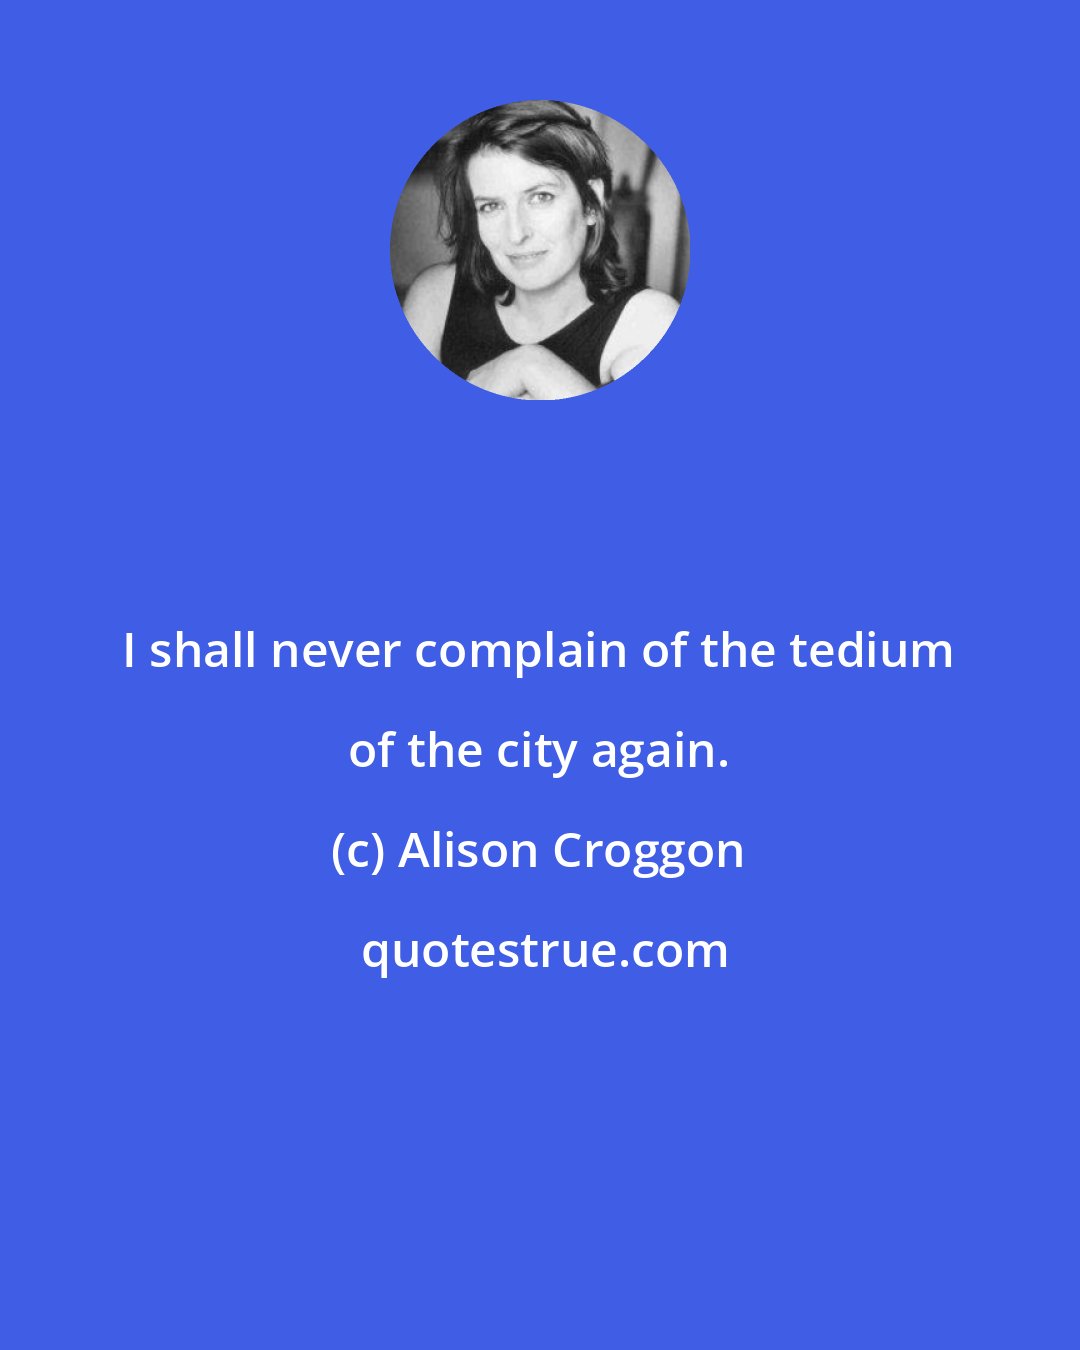 Alison Croggon: I shall never complain of the tedium of the city again.